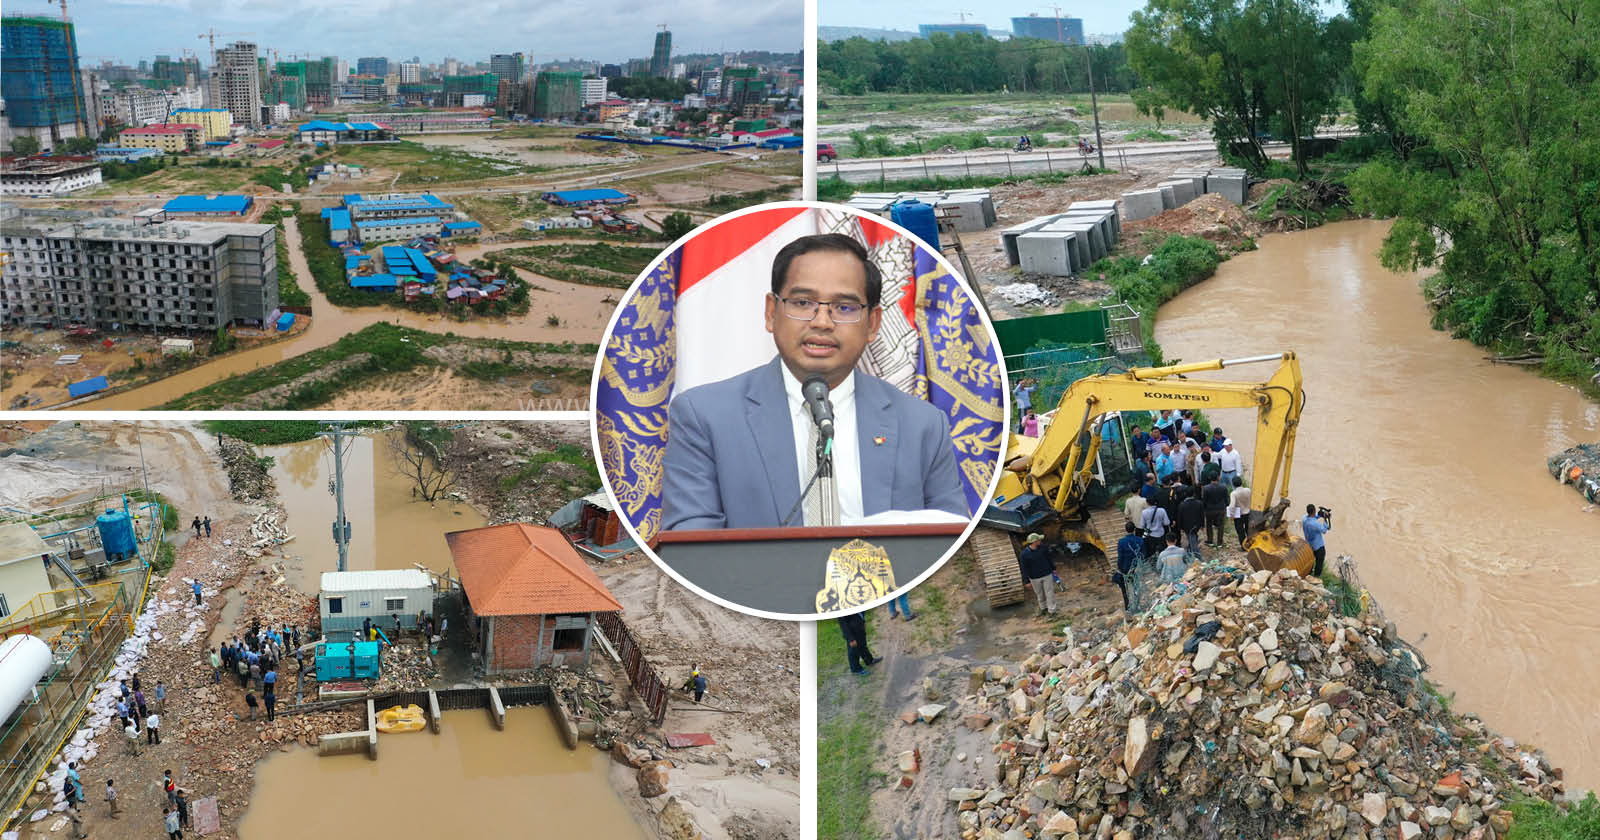 US$140million Sihanoukville Wastewater Treatment Plants 48% Complete